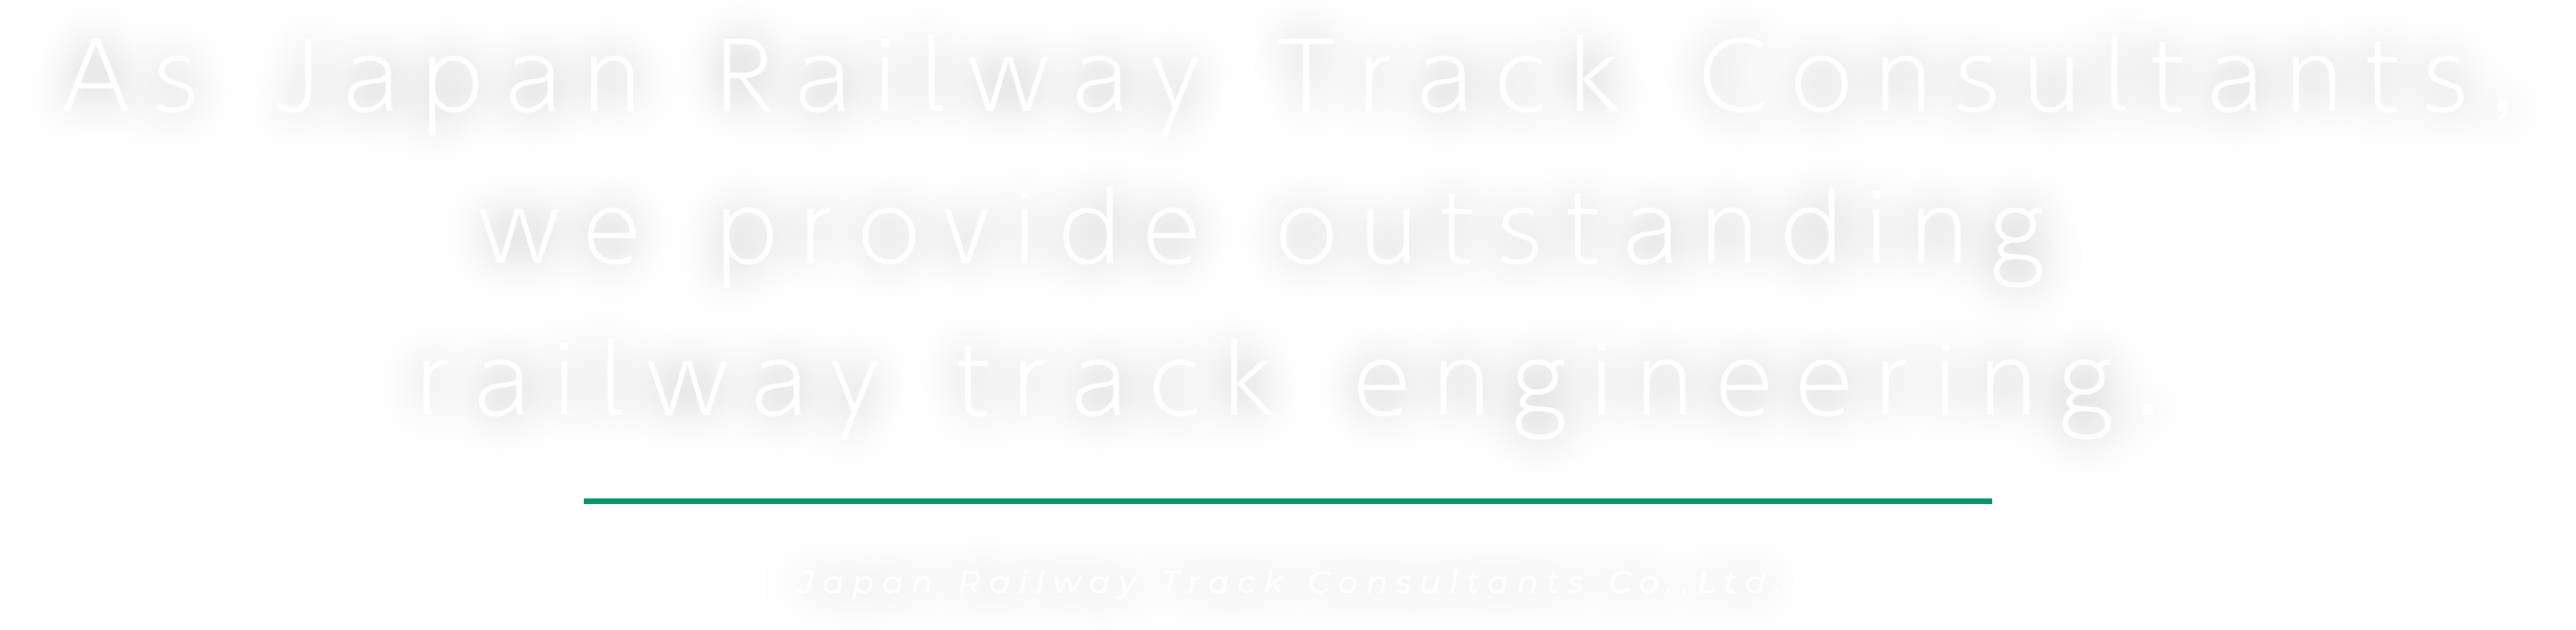 As Japan Railway Track Consultants, we provide outstanding railway track engineering.